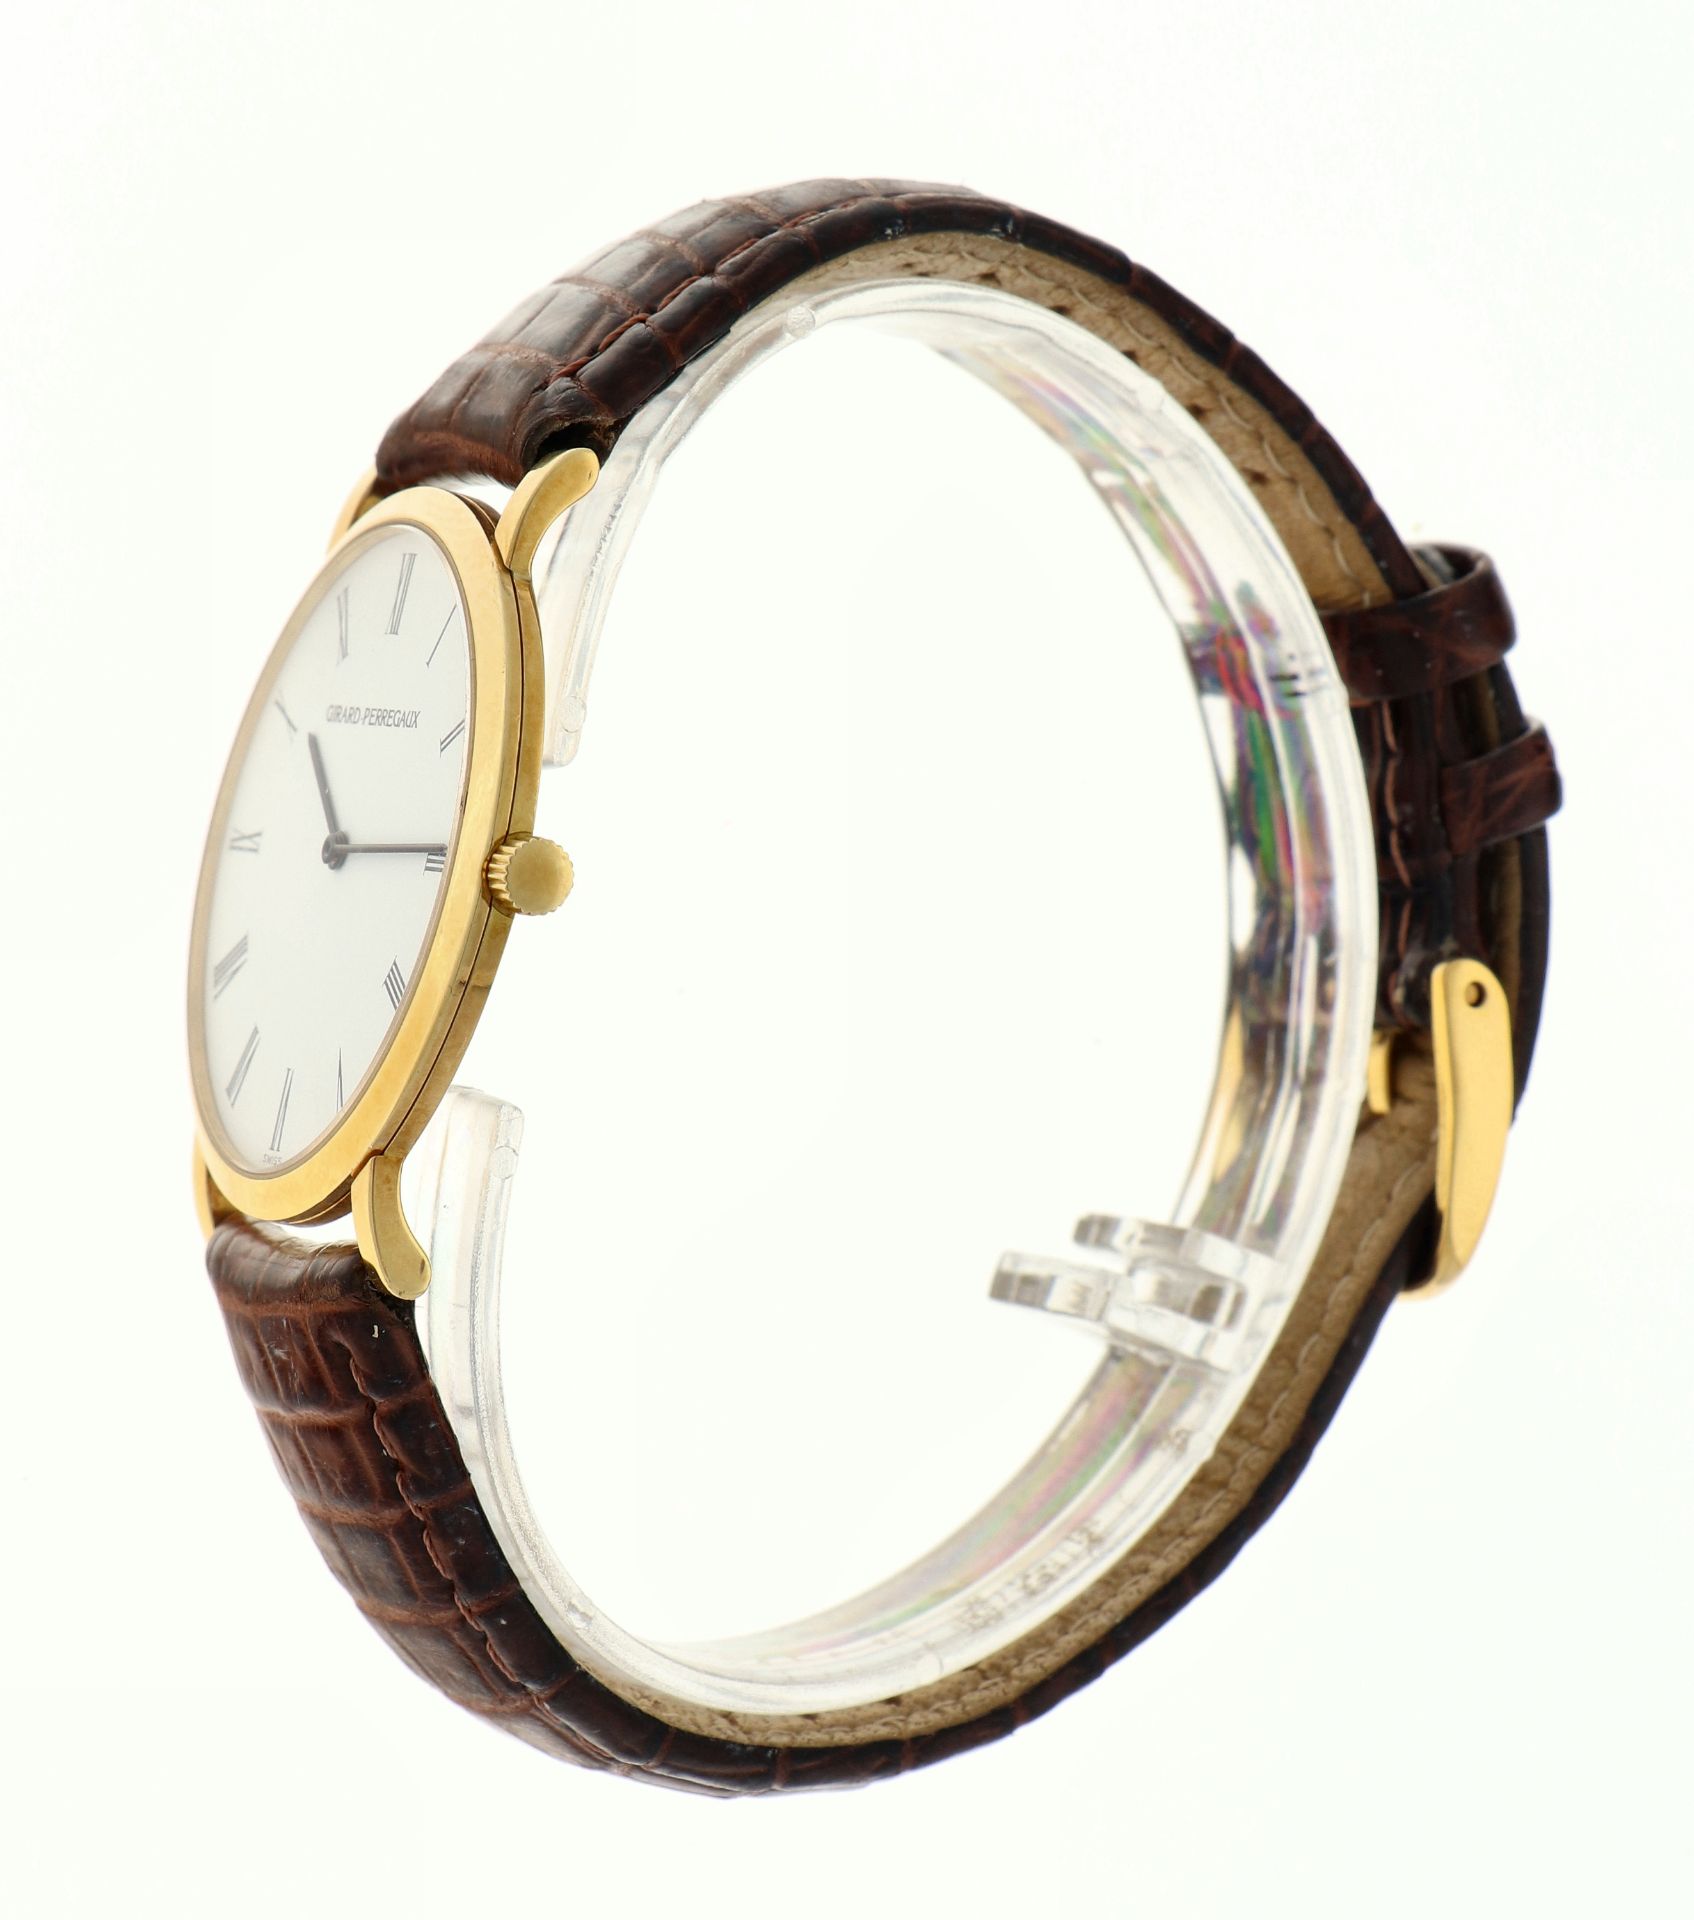 Girard Perregaux Classique Elegance 4762 - Men's watch. - Image 5 of 6